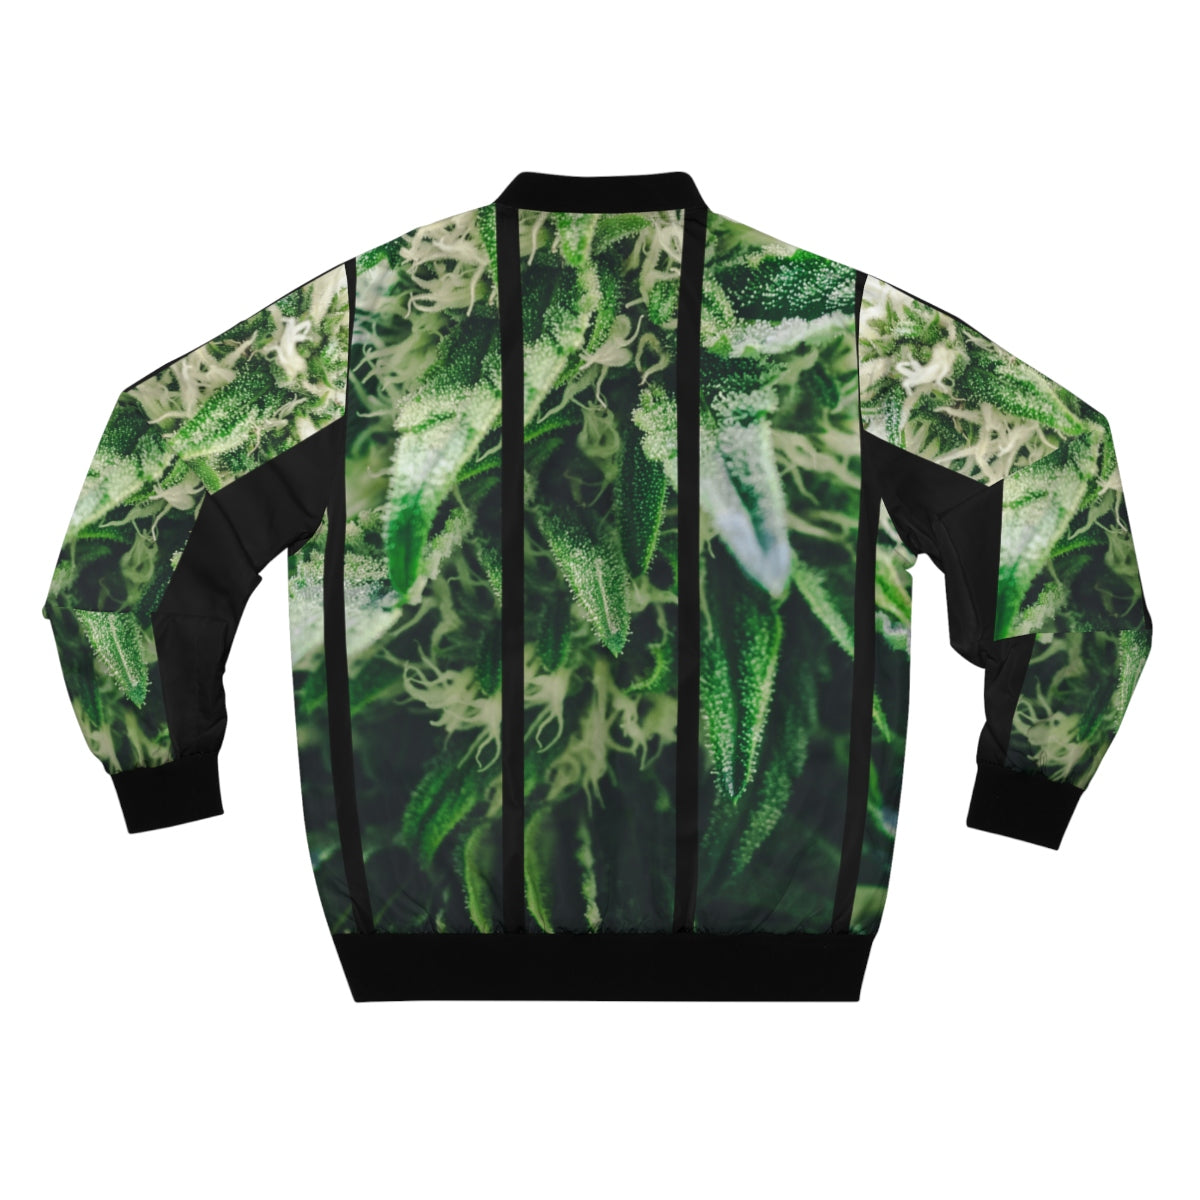 Capelli Bianchi Cannabis Bomber Jacket